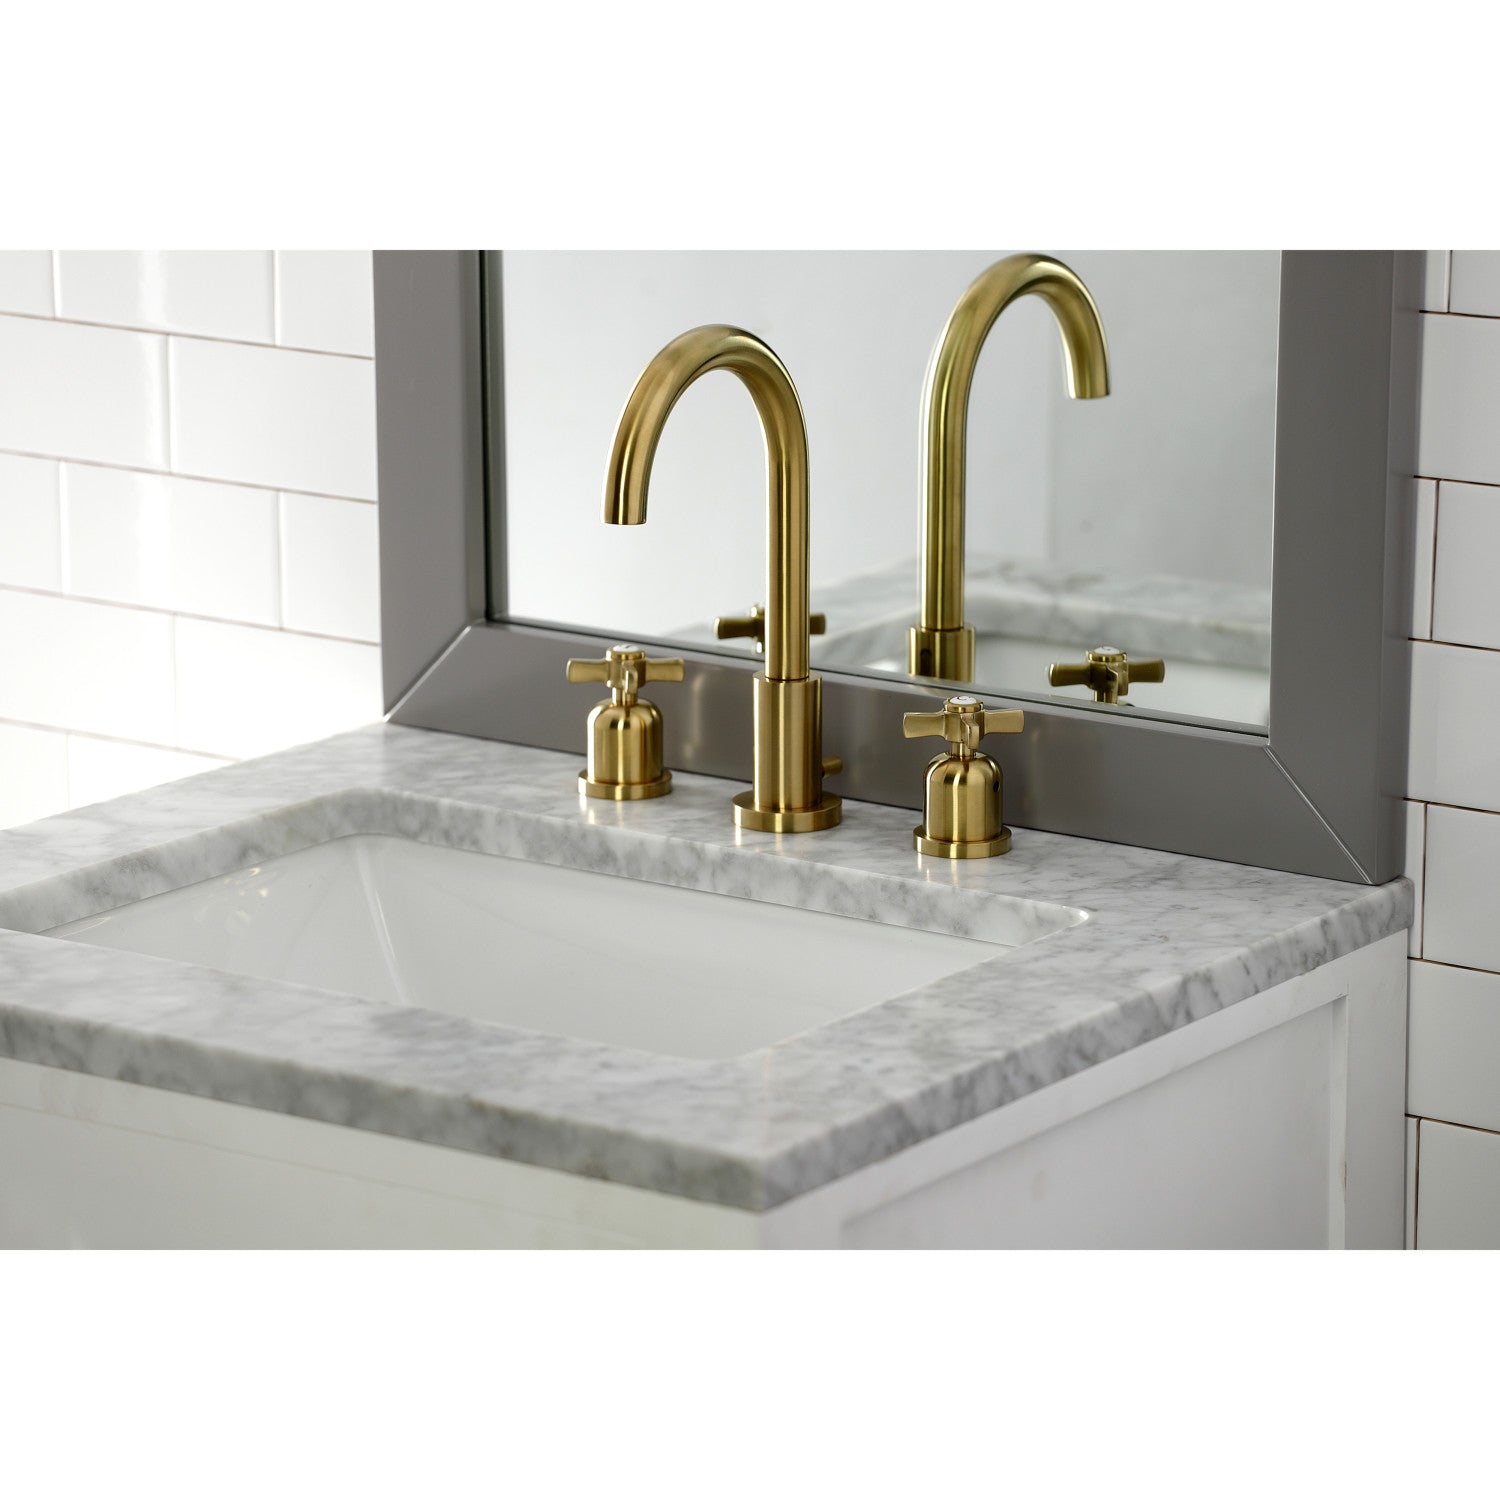 Kingston Brass FSC8929ZX Millennium Widespread Bathroom Faucet, 5-3/8 Inch  in Spout Reach, Polished Nickel